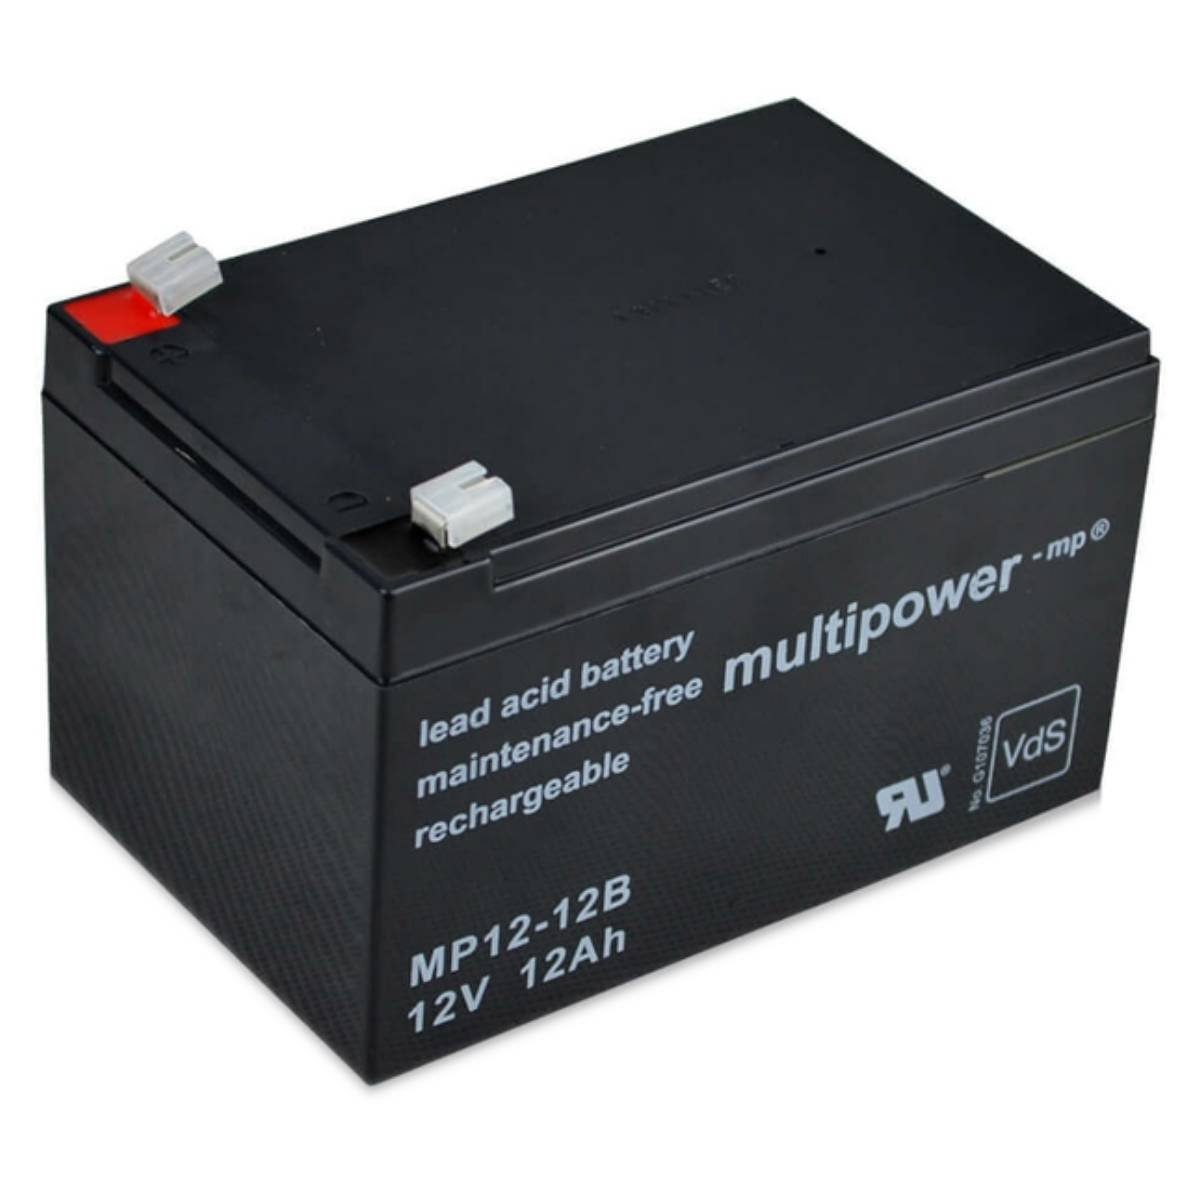 Multipower multipower MP12-12B Batterie 12V 12Ah VdS Zulassung USV Bleiakku AGM Batterie, (12 V)